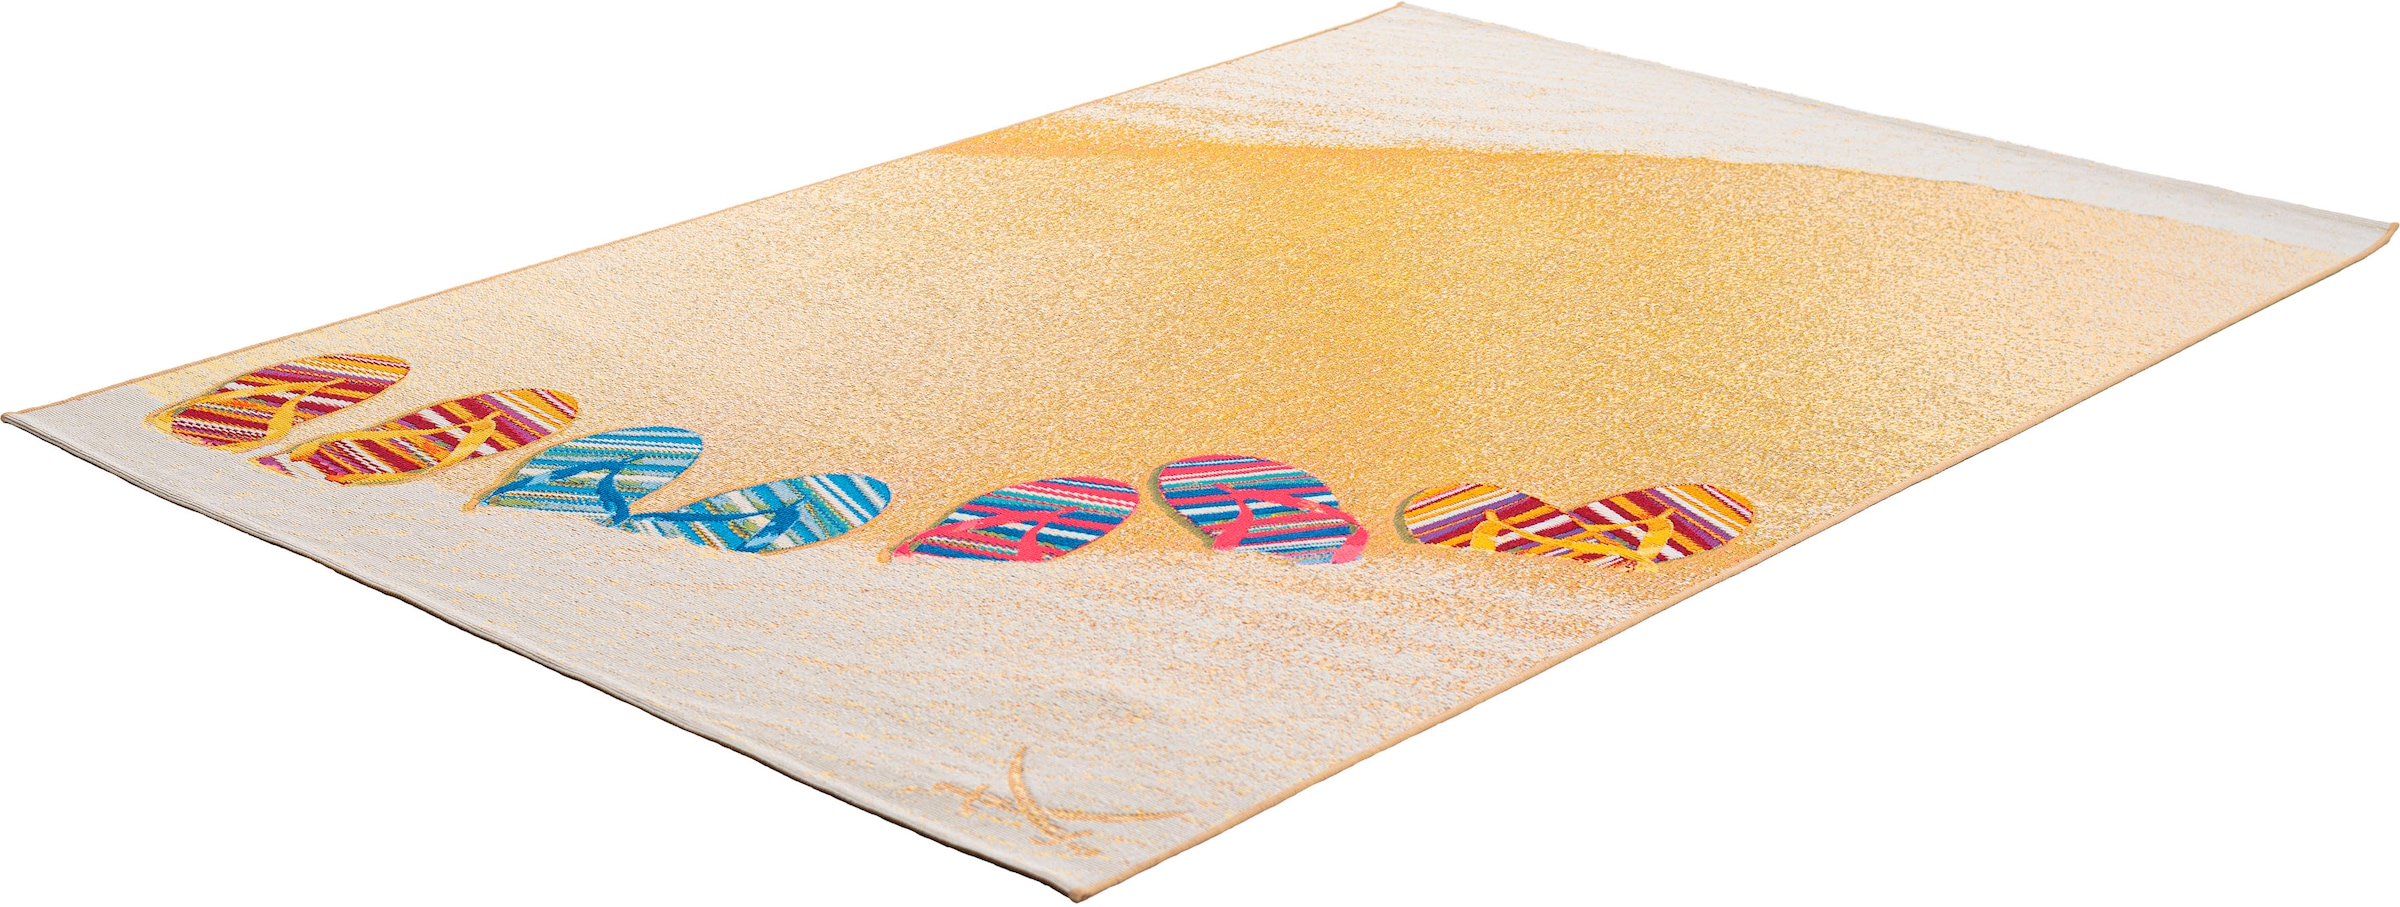 Sansibar Teppich »Rantum Beach SA-017«, rechteckig, Flachgewebe, modernes  Design, Motiv Badelatschen, Outdoor geeignet bei OTTO